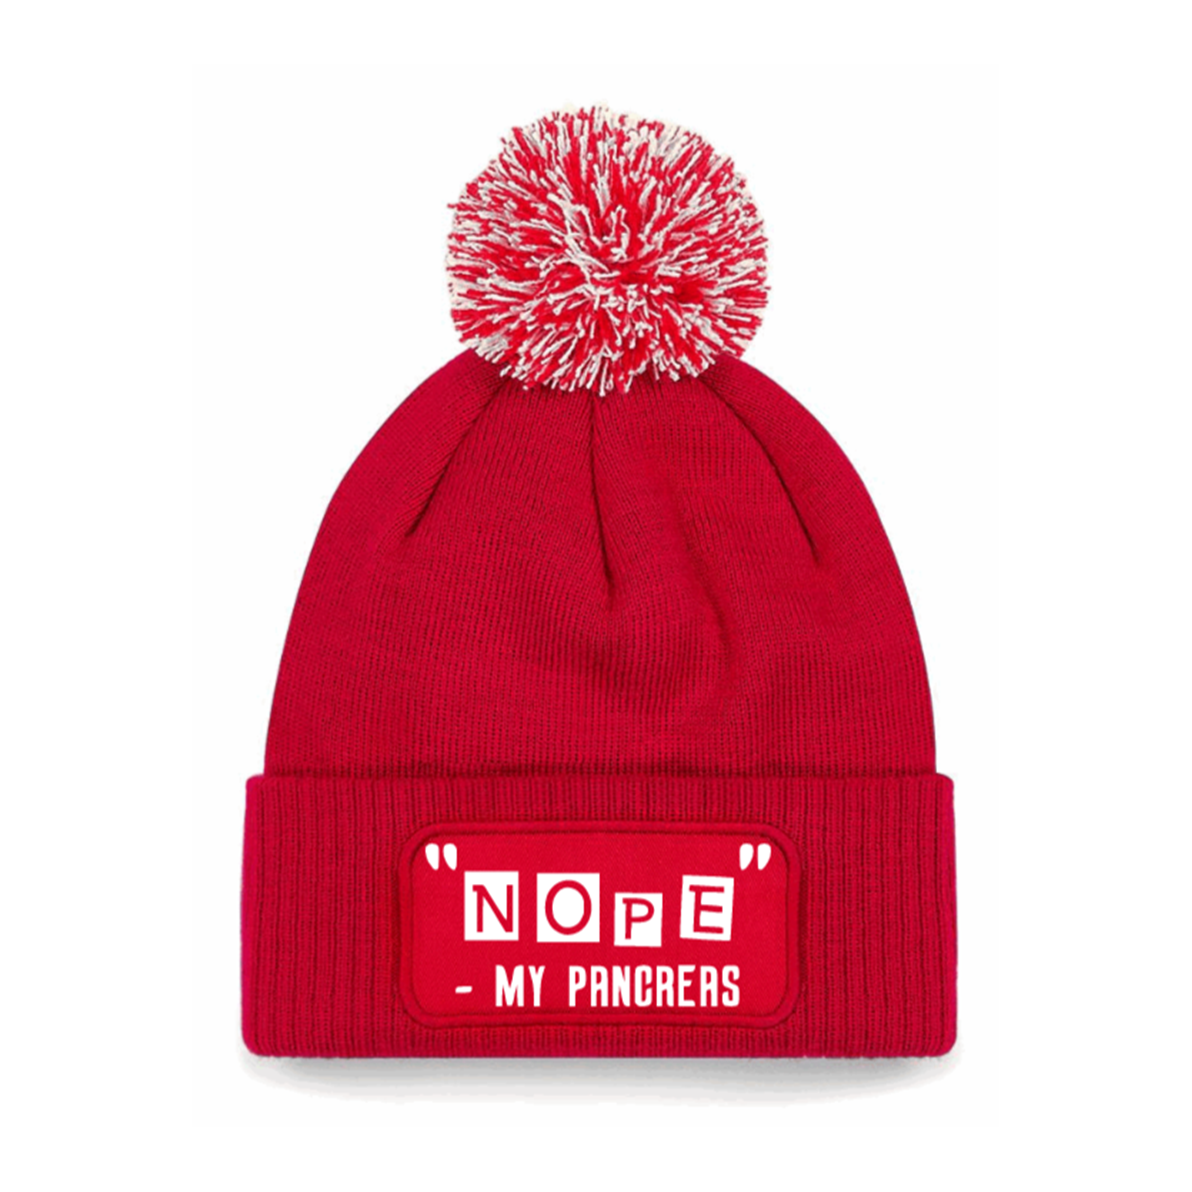 "Nope" - My Pancreas Beanie Hat